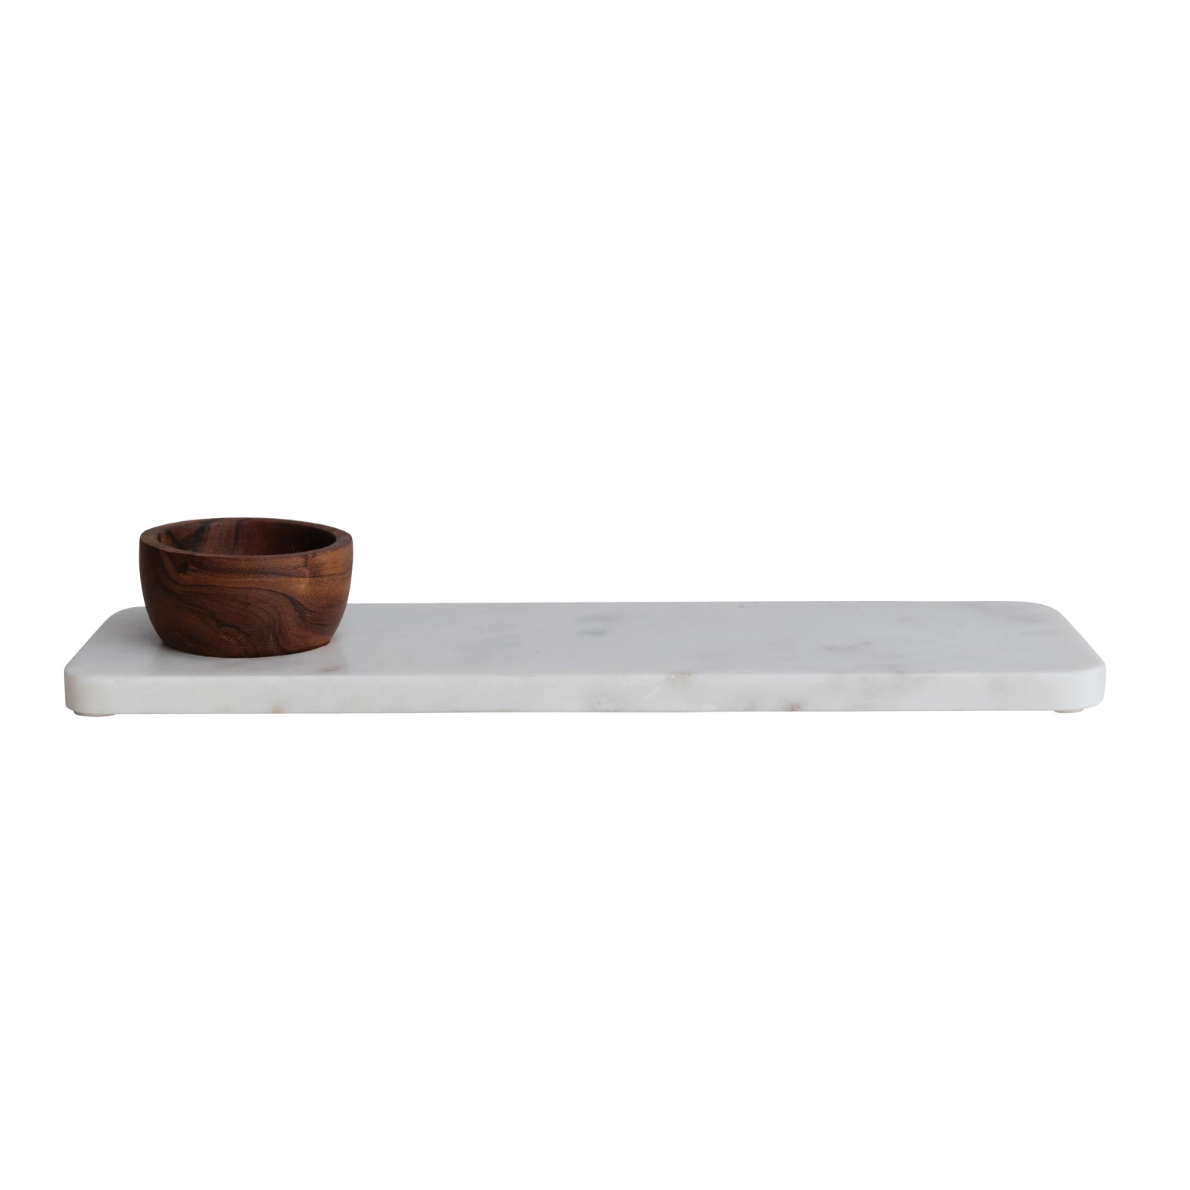 Marble Board with Acacia Wood Bowl, Set of 2